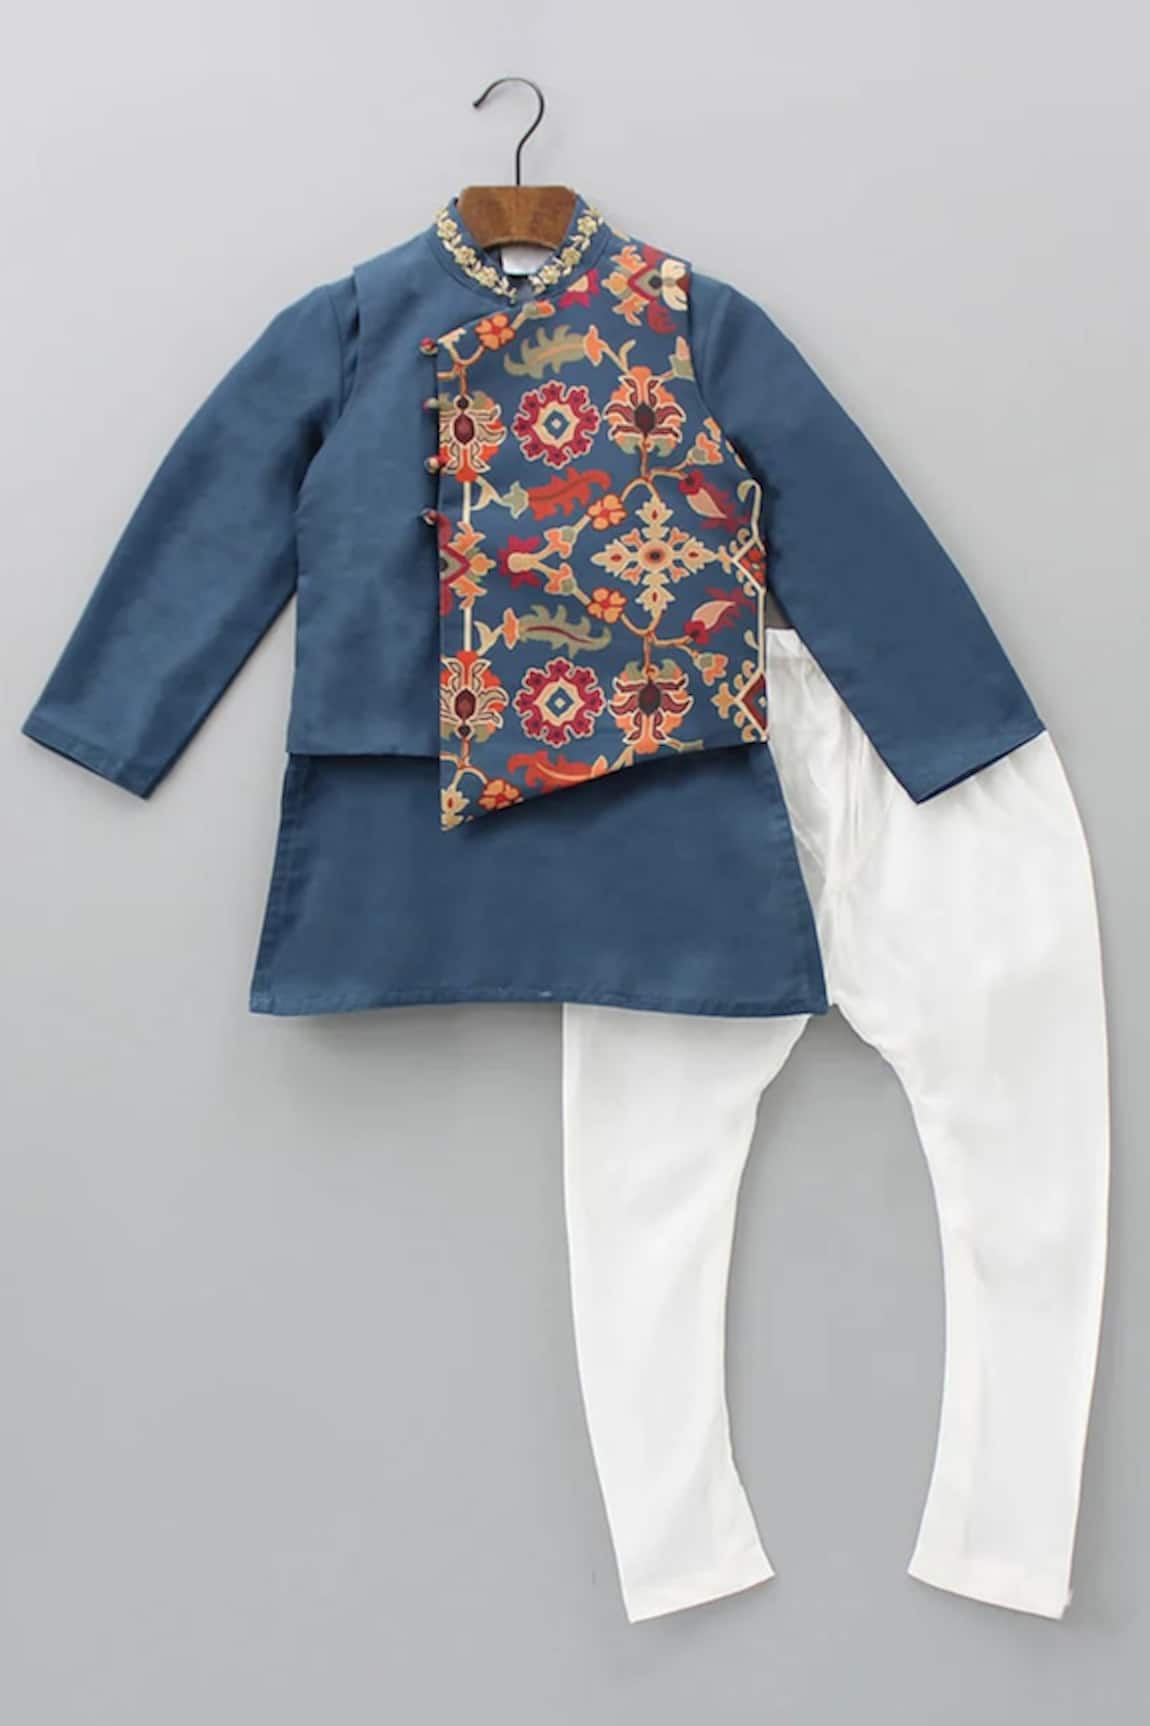 Diwali Traditional Party and Festive Wear Cotton Kurta Pajama Set for Boys  Kids | eBay